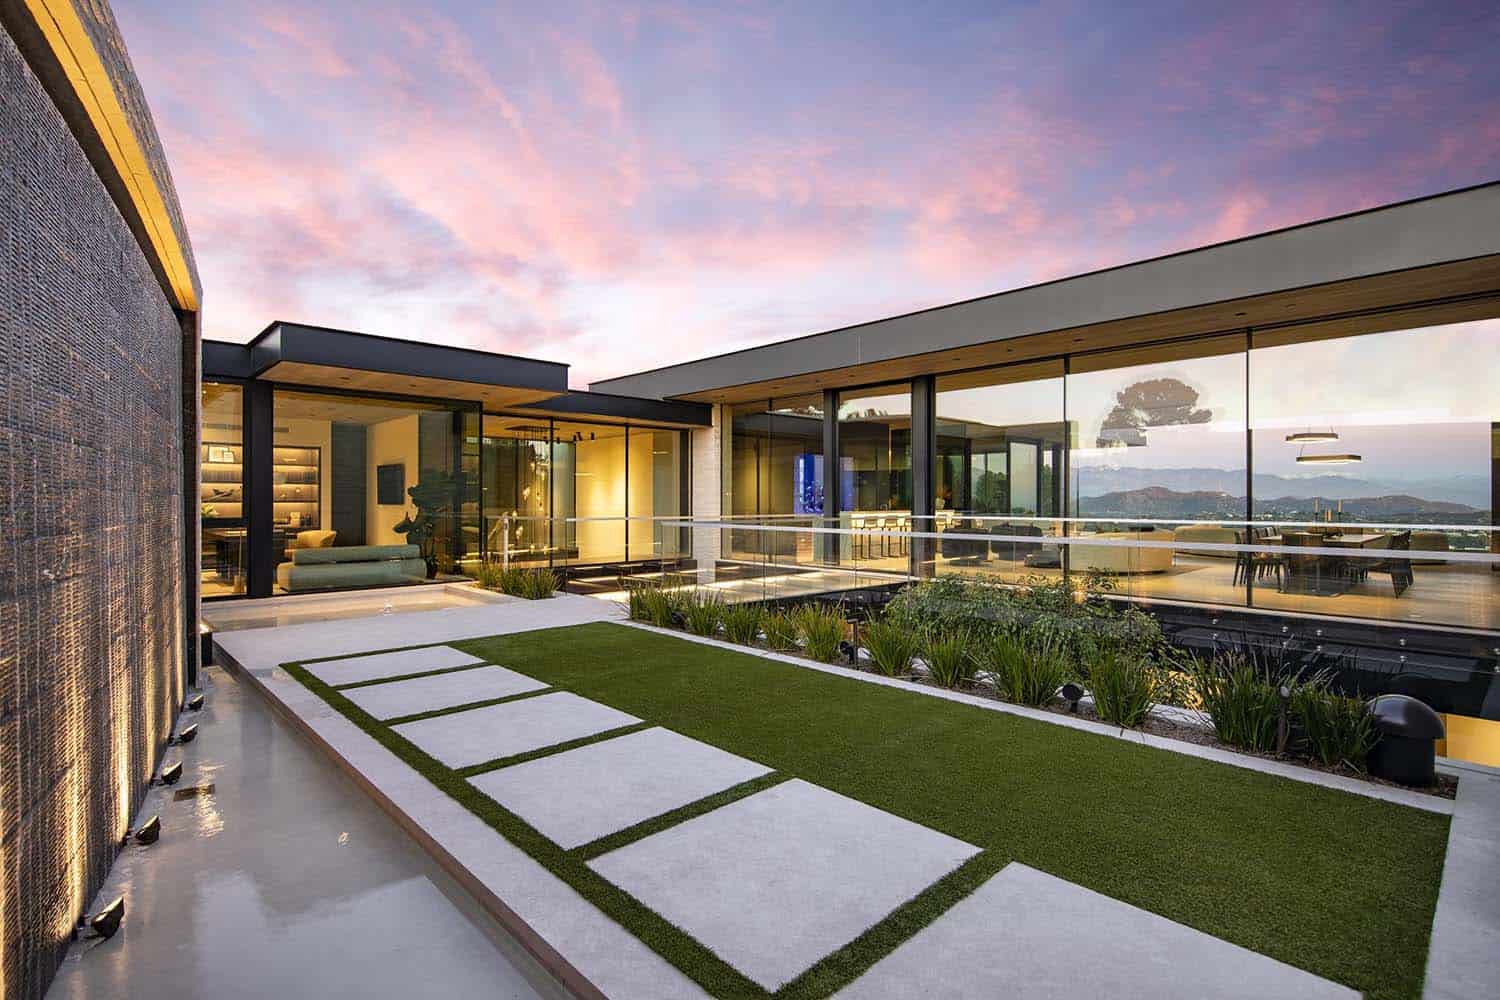 Impressive modern home with awe-inspiring views of the San Gabriel mountains